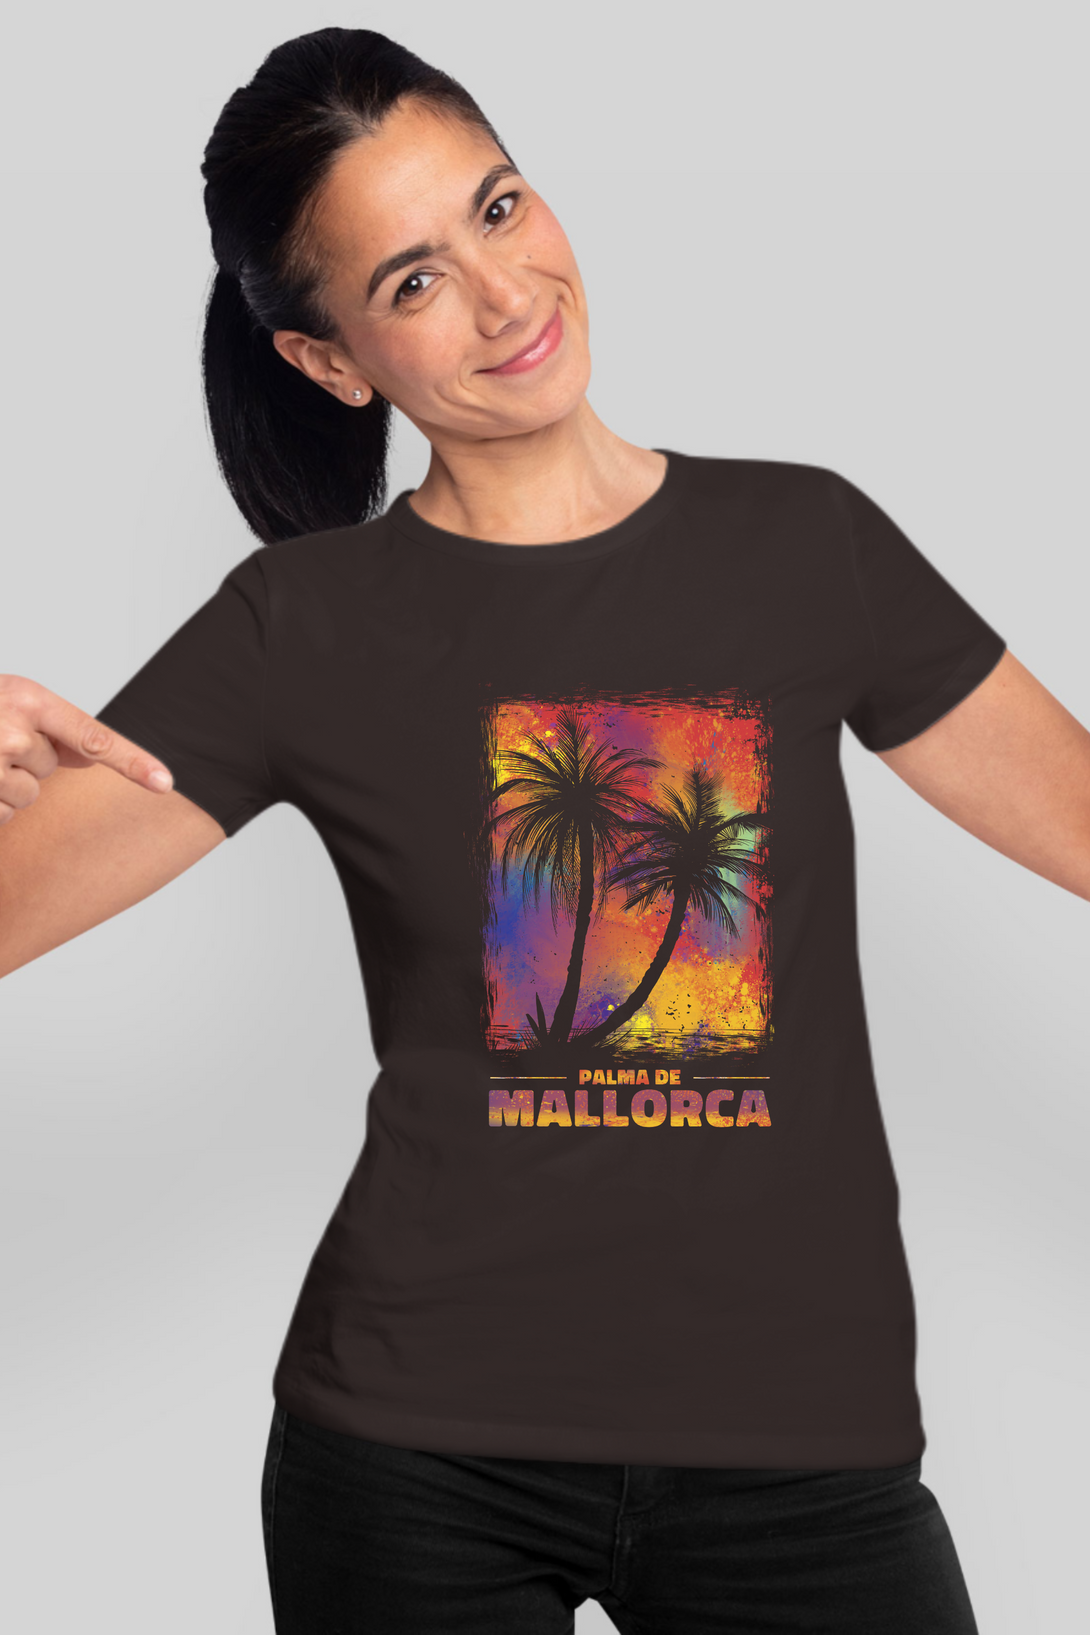 Palma De Mallorca Printed T-Shirt For Women - WowWaves - 9